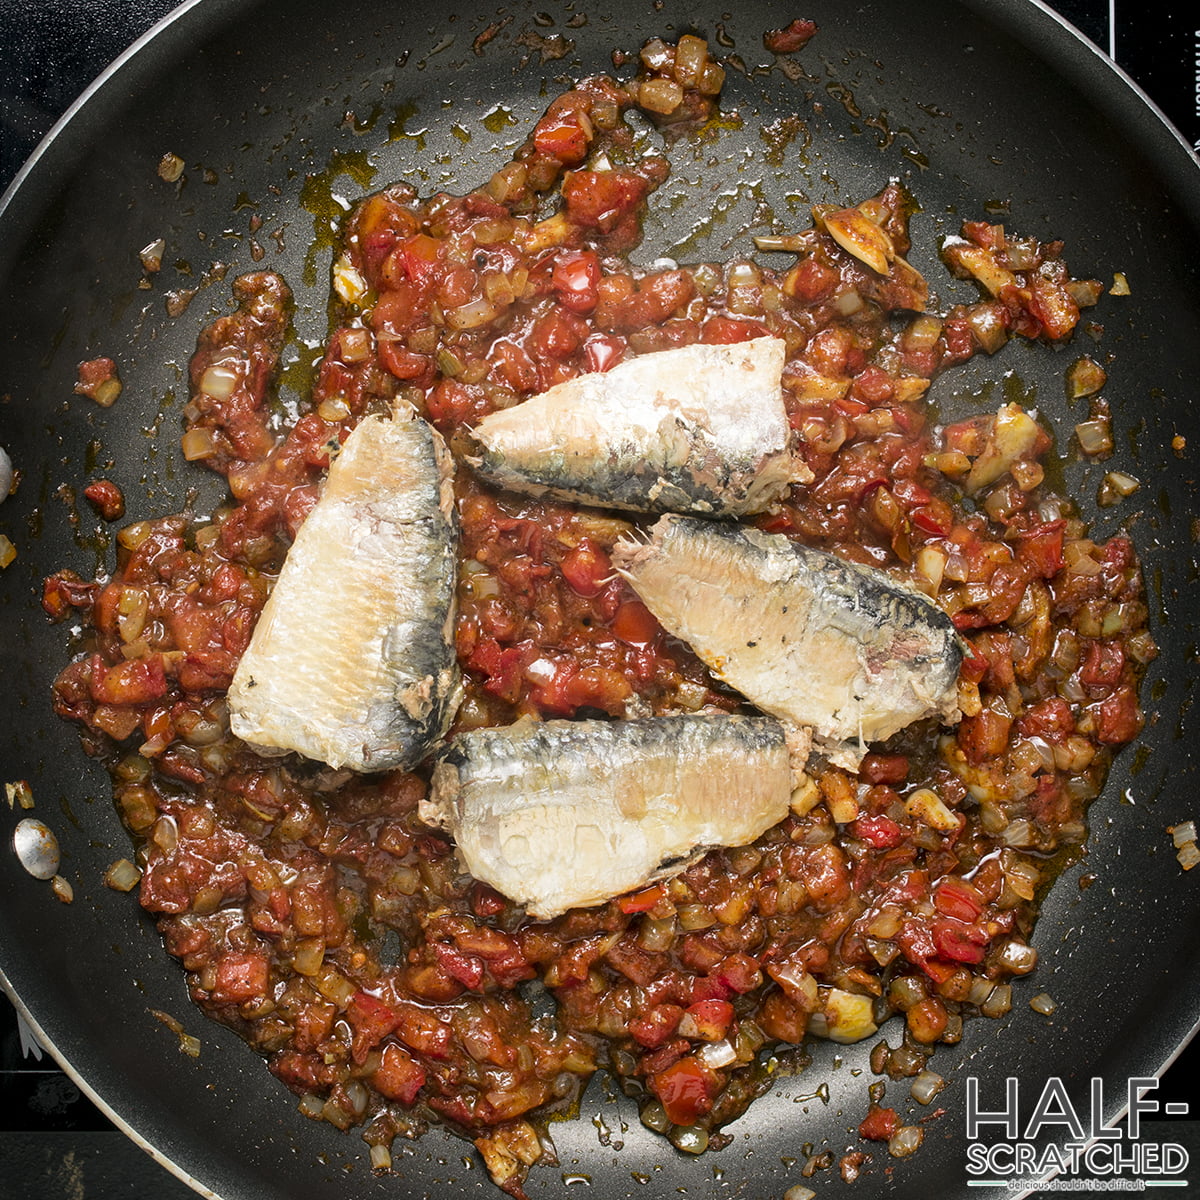  Adding the sardines to the tomato sauce